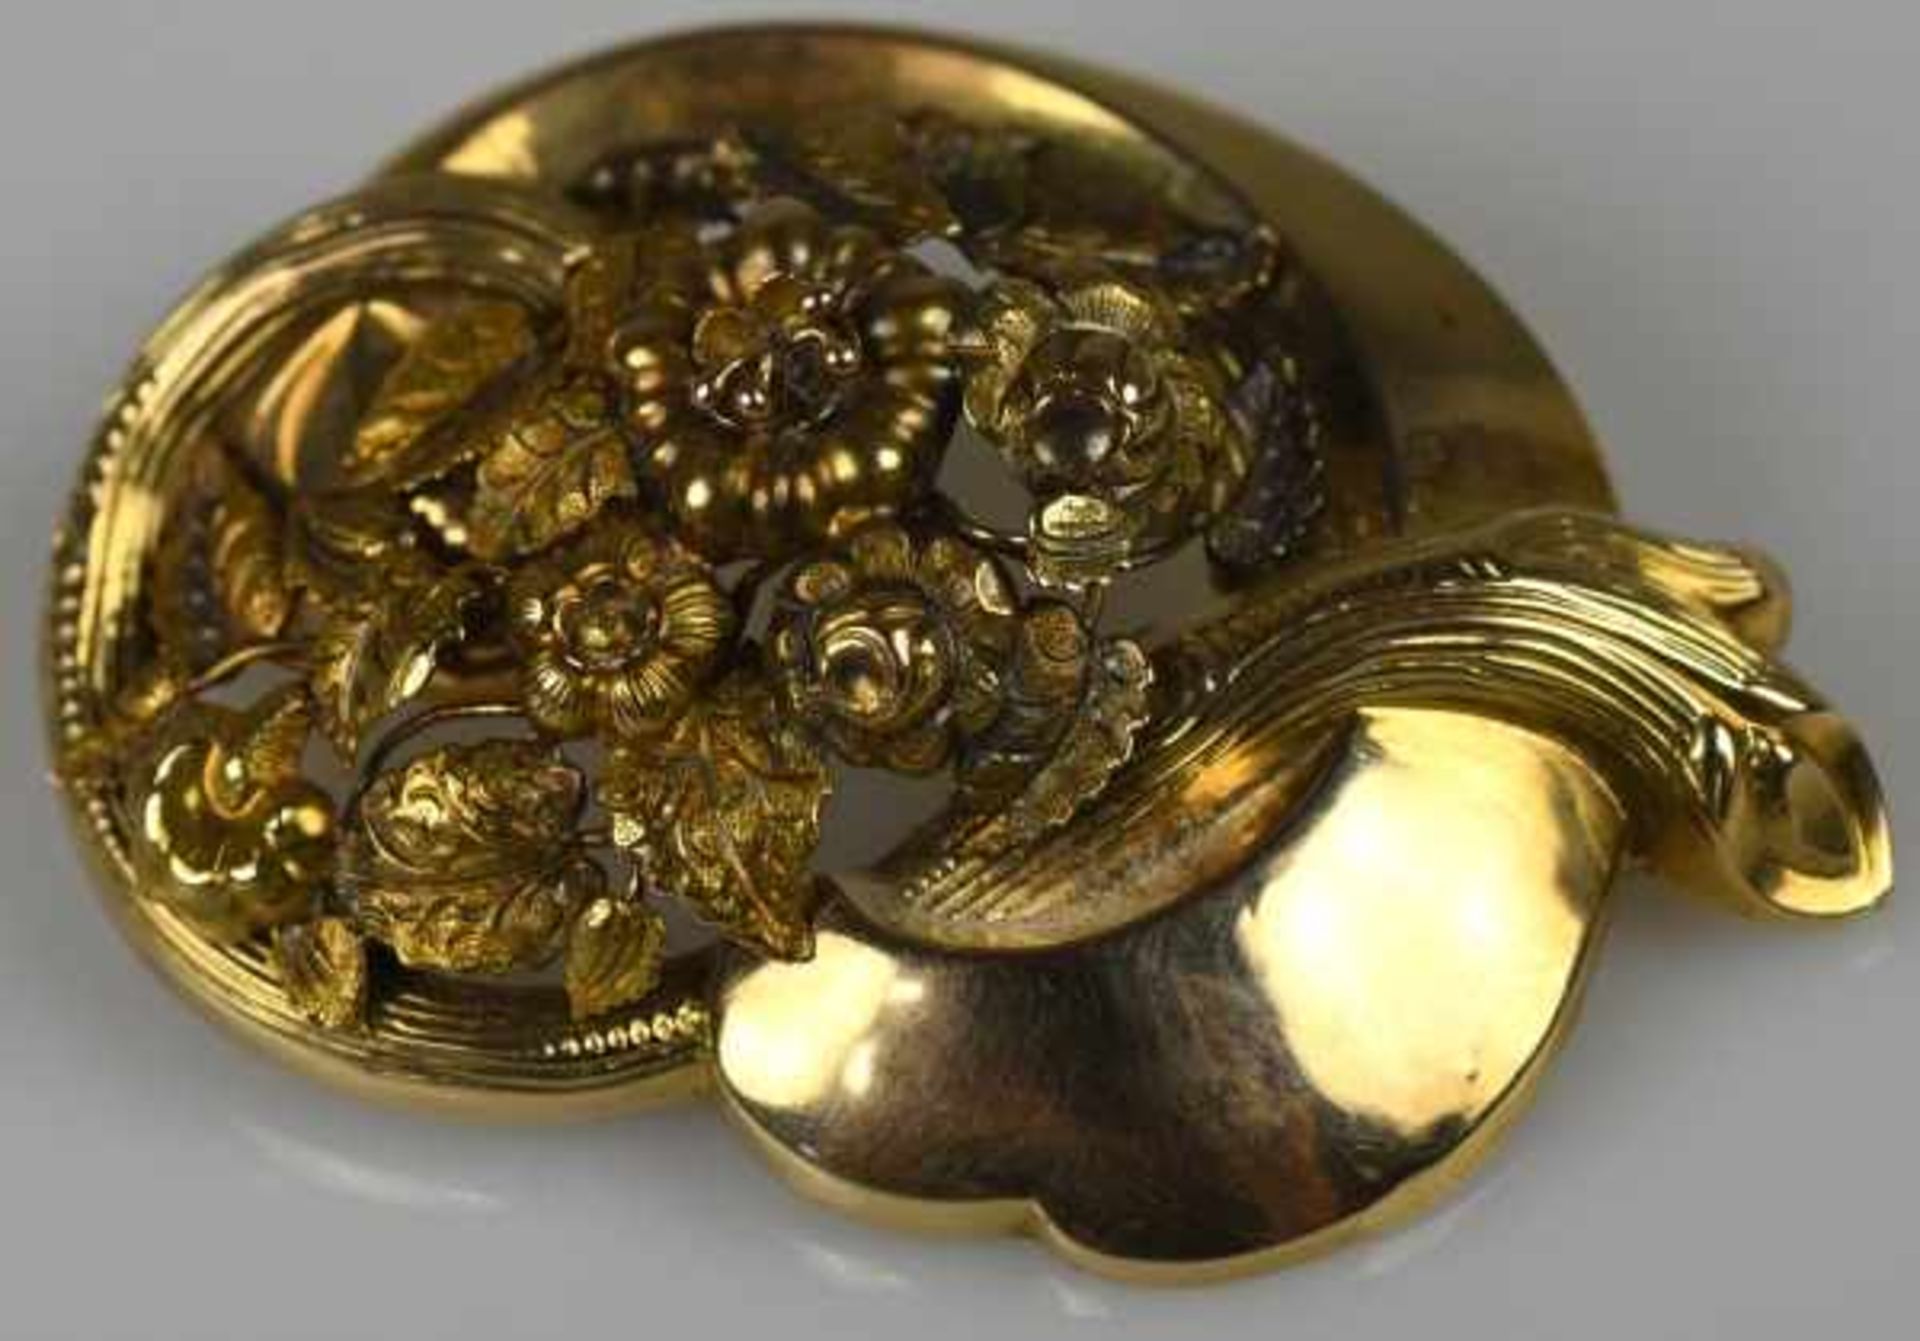 BROSCHE oval geschwungen, mittig plastisches Blütenarrangement, Schaumgold, antik, 19.Jh.,